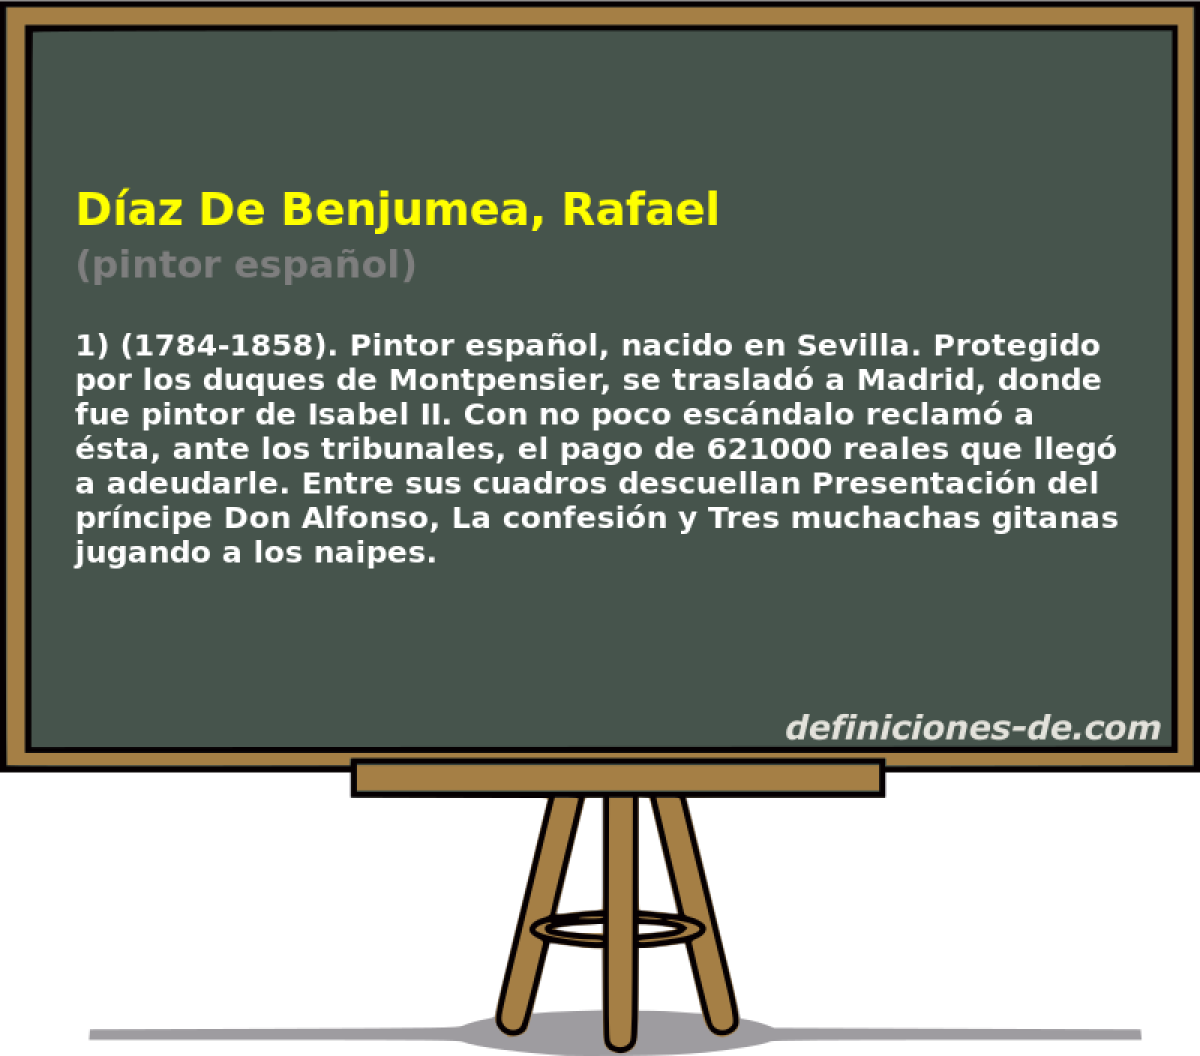 Daz De Benjumea, Rafael (pintor espaol)